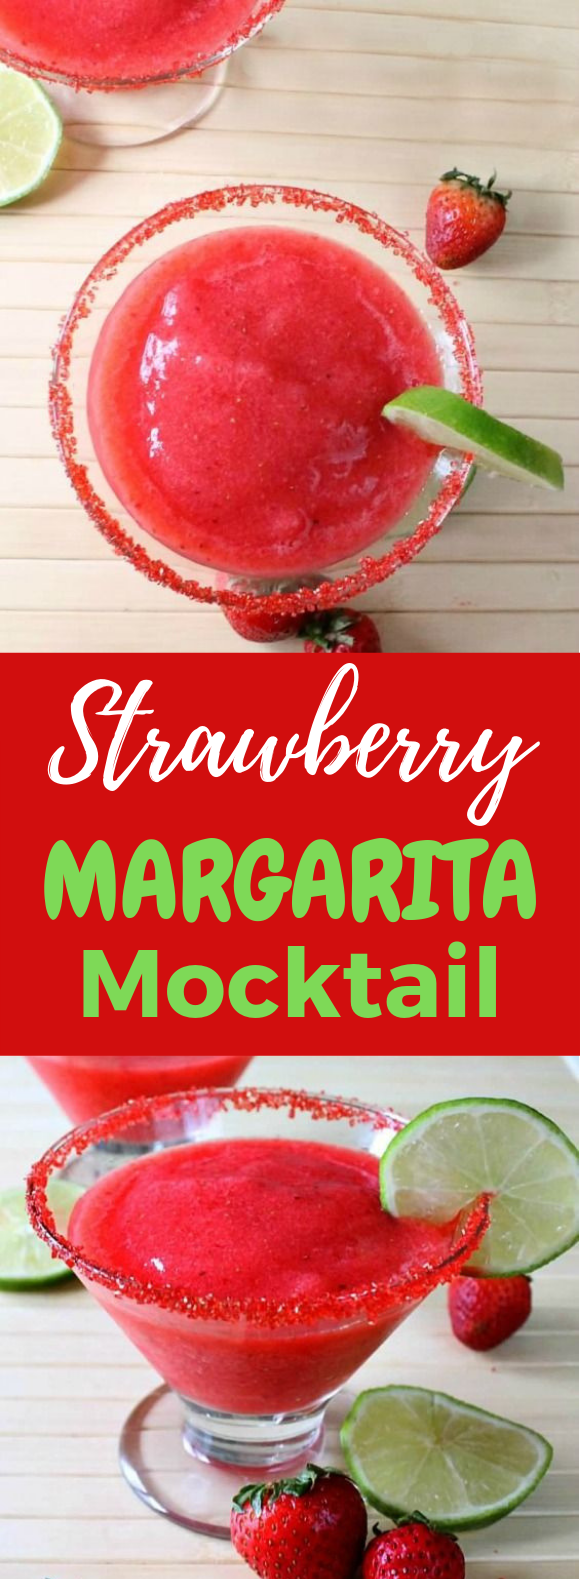 STRAWBERRY MARGARITA MOCKTAIL #Mocktail #Drink